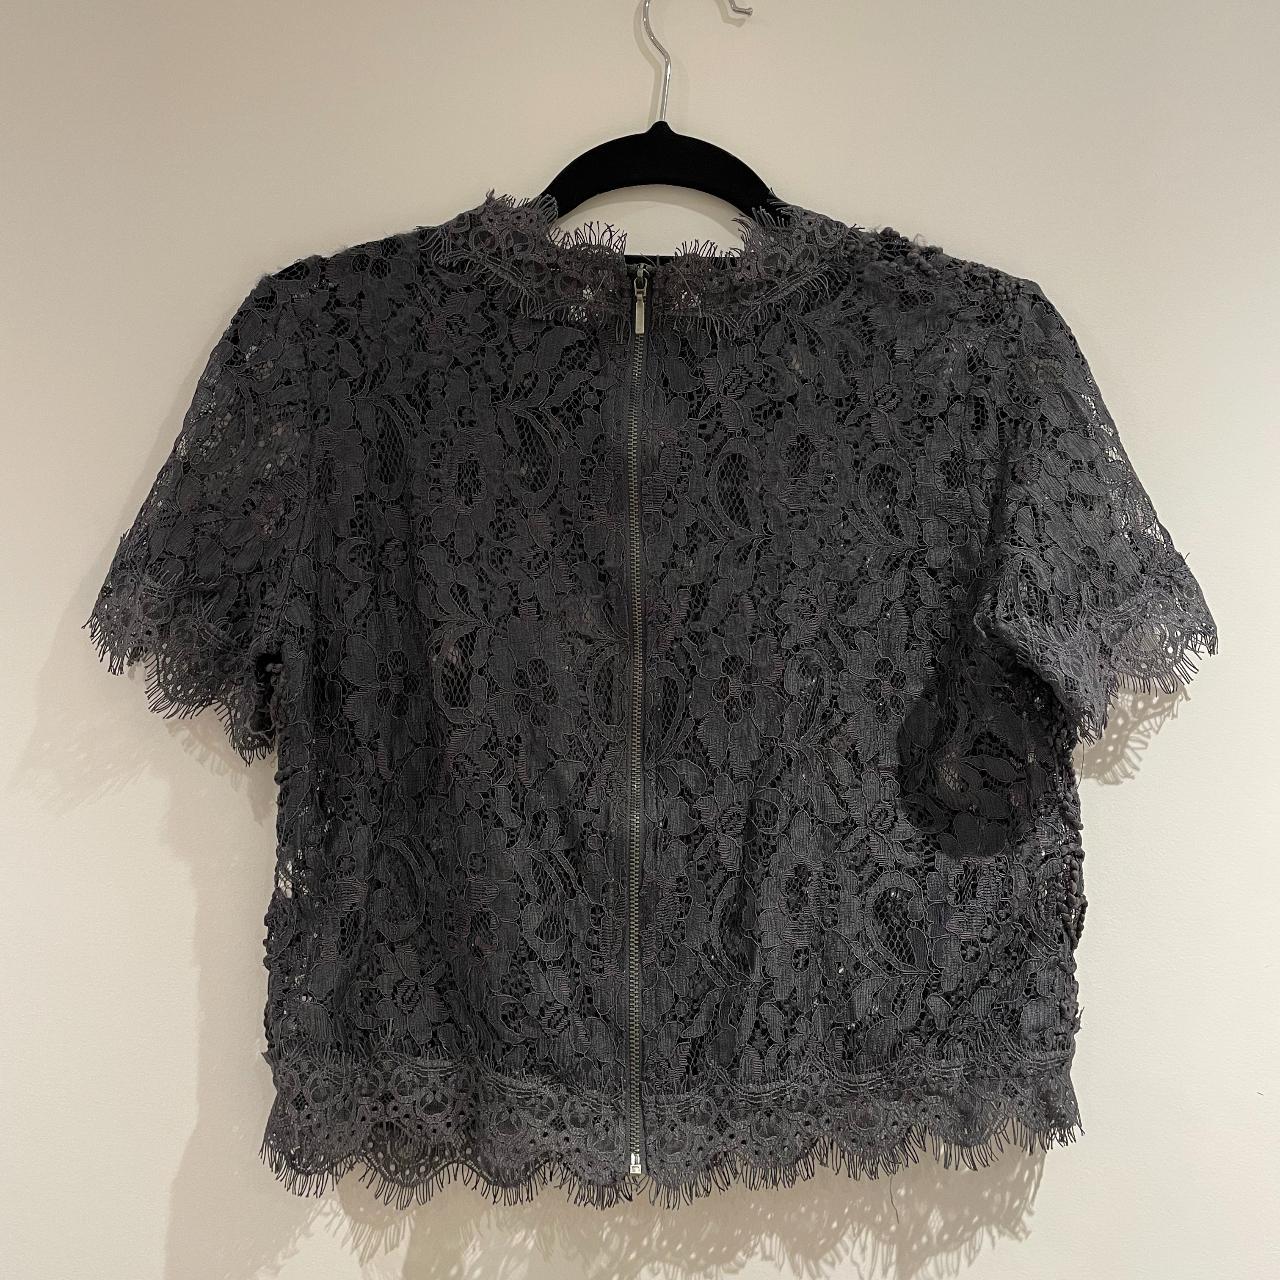 Product Image 3 - Grey Lace Shirt 

Size: M